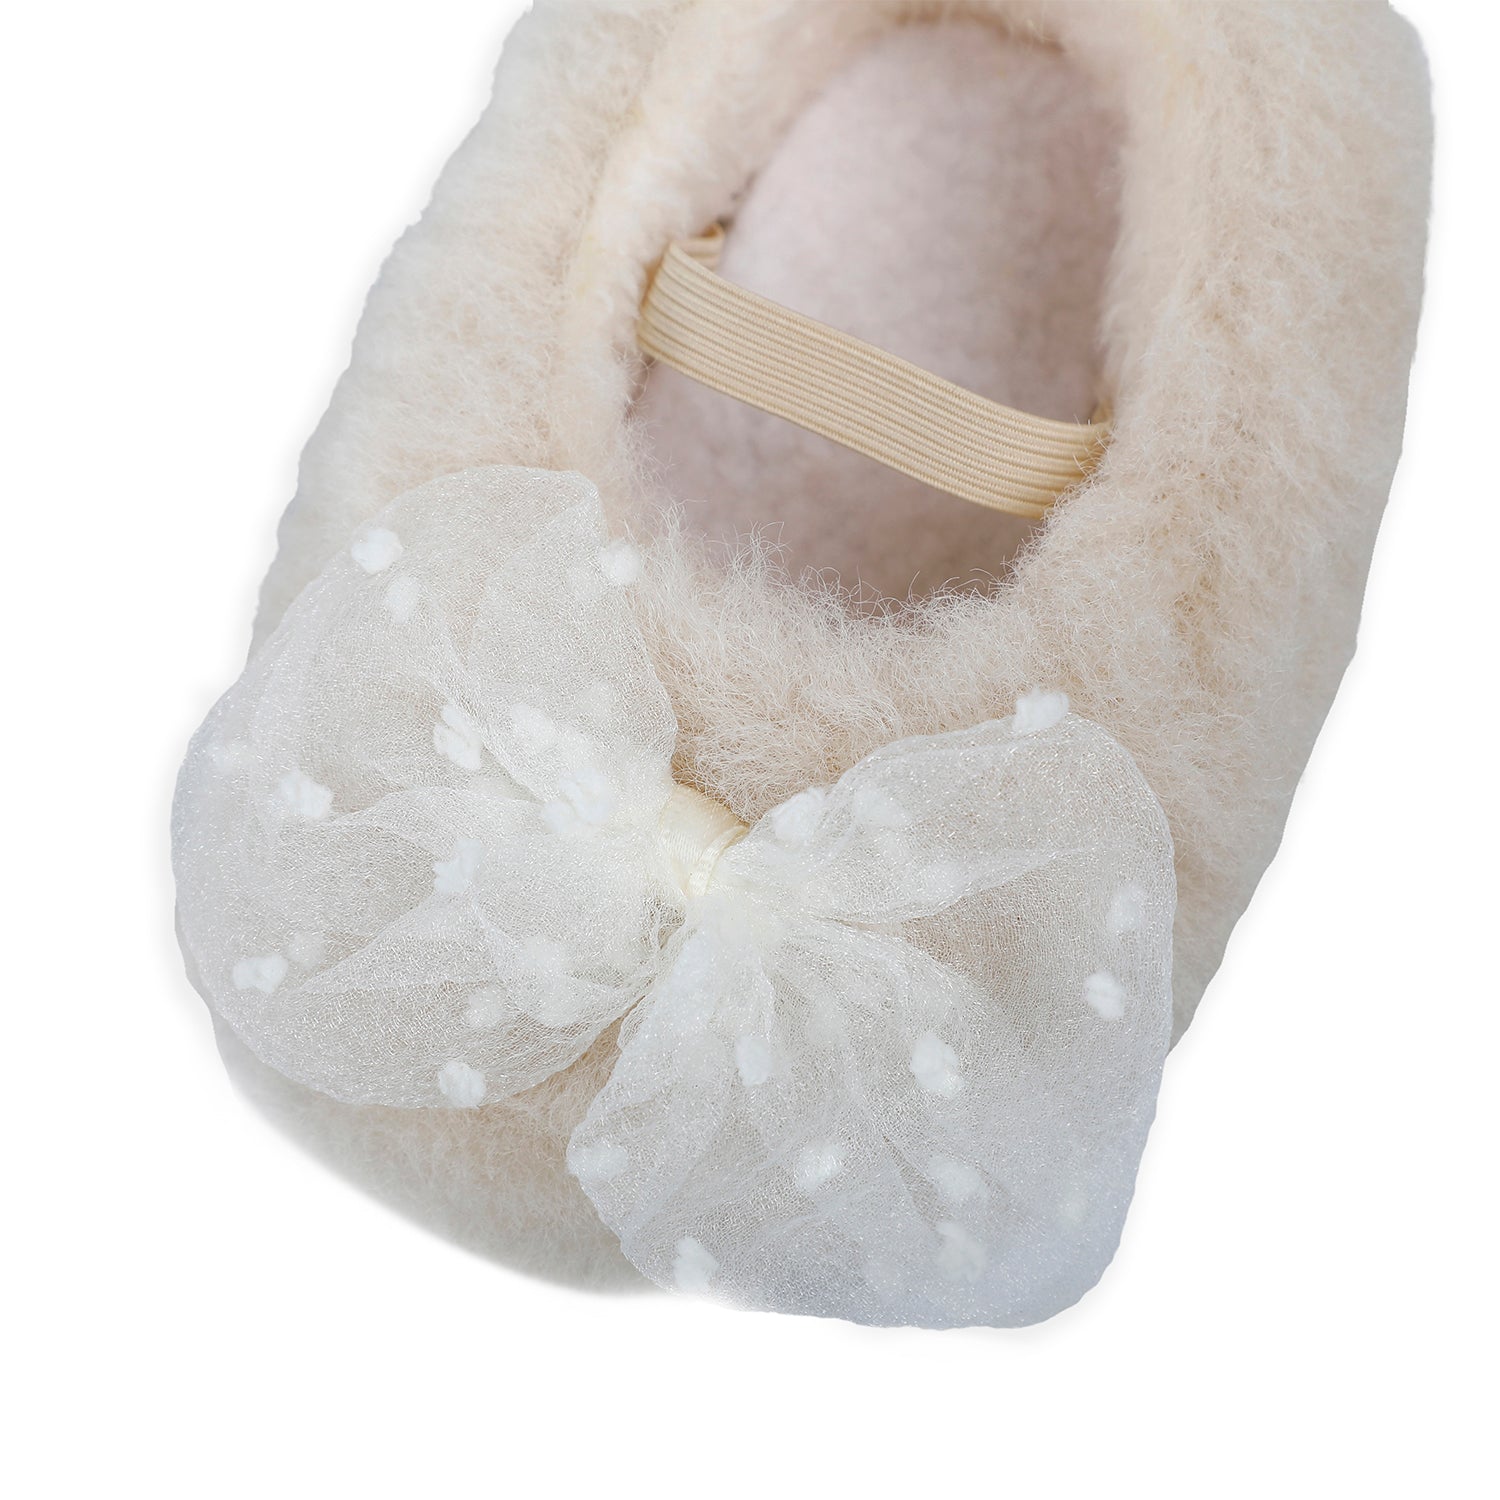 Baby Moo Bow Applique Warm Furry Booties - Cream - Baby Moo